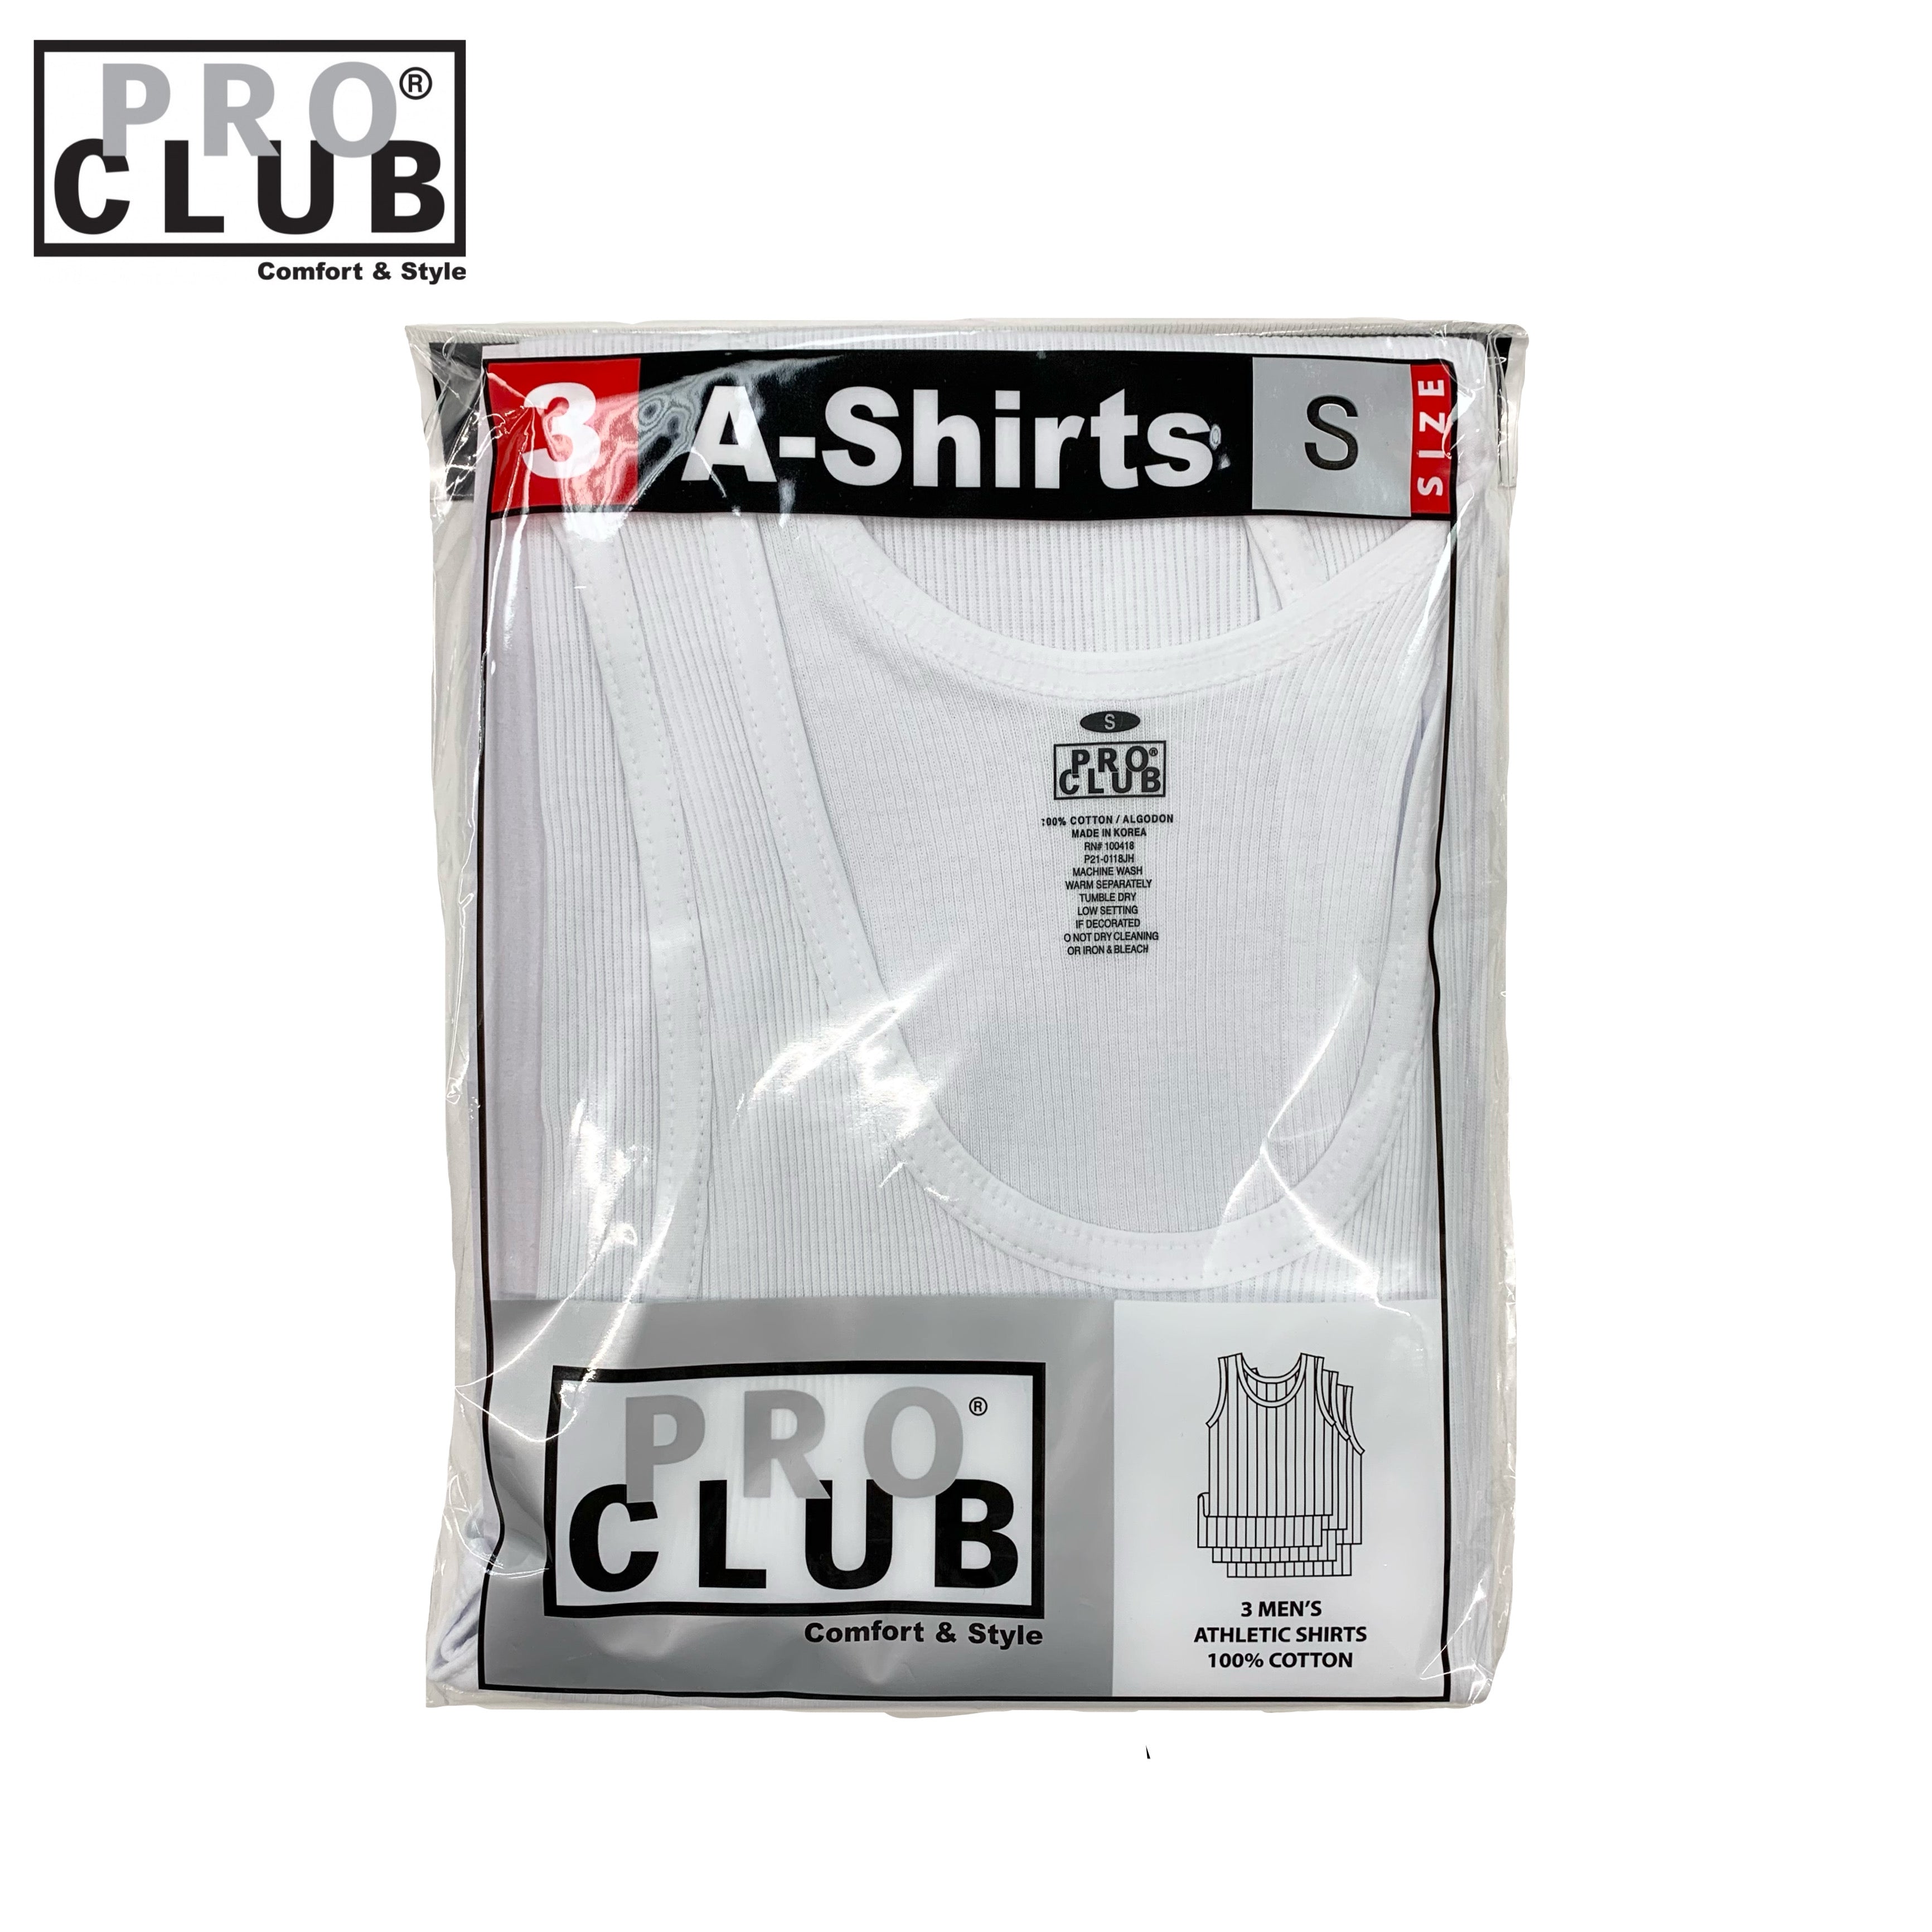 Pro Club Men's Premium Ringspun Cotton Ribbed A-Shirt (Muscle Shirt)